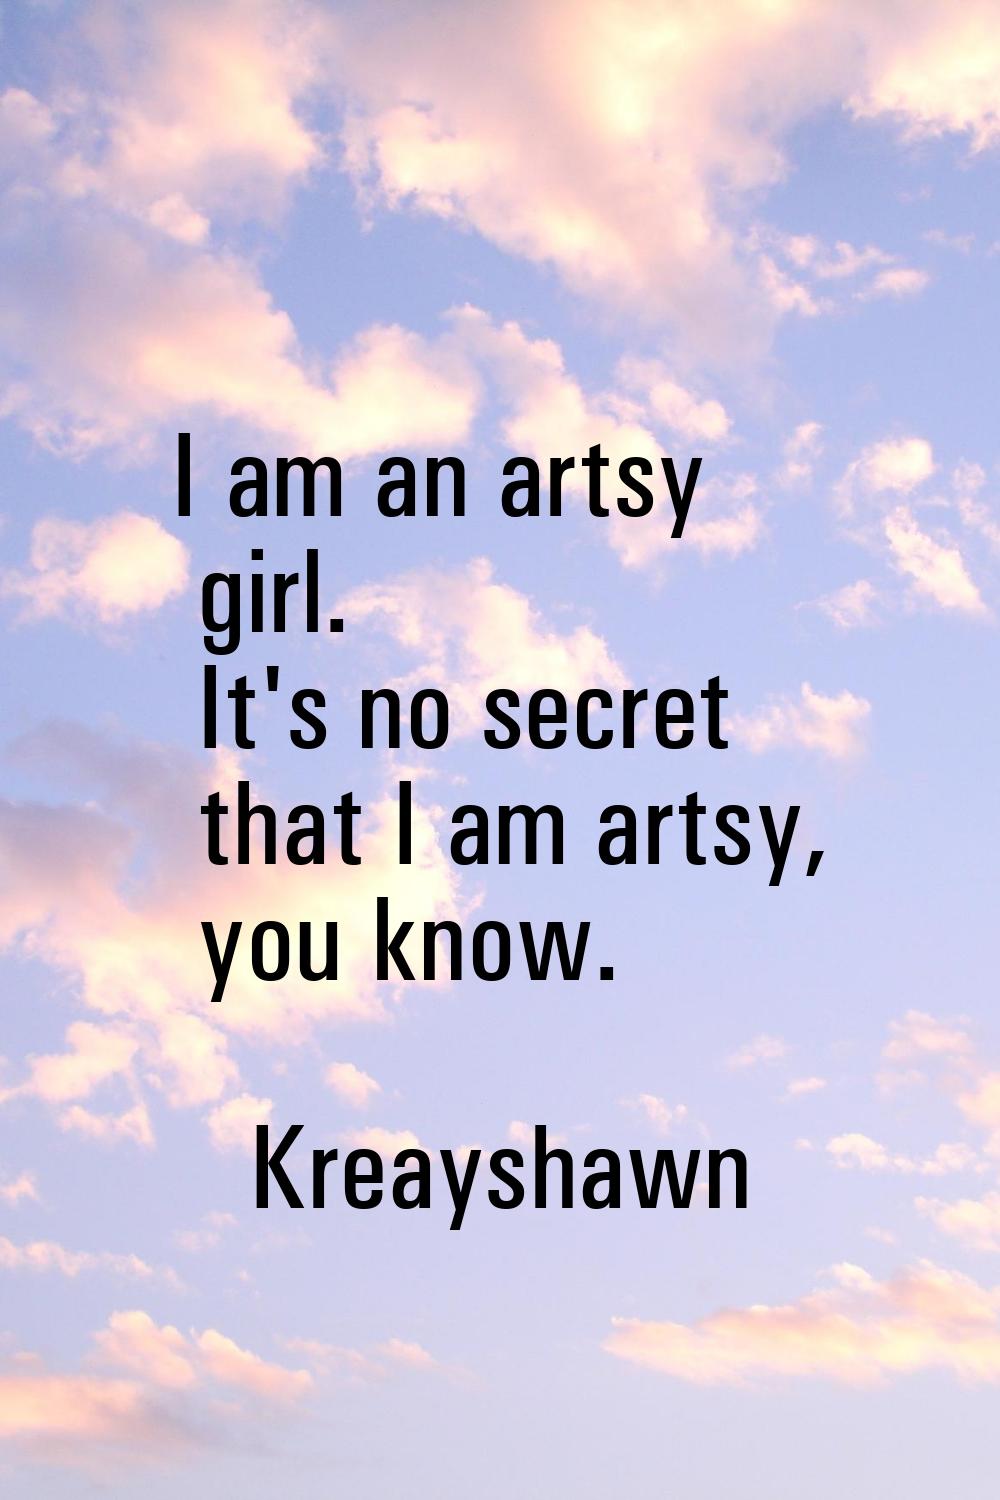 I am an artsy girl. It's no secret that I am artsy, you know.